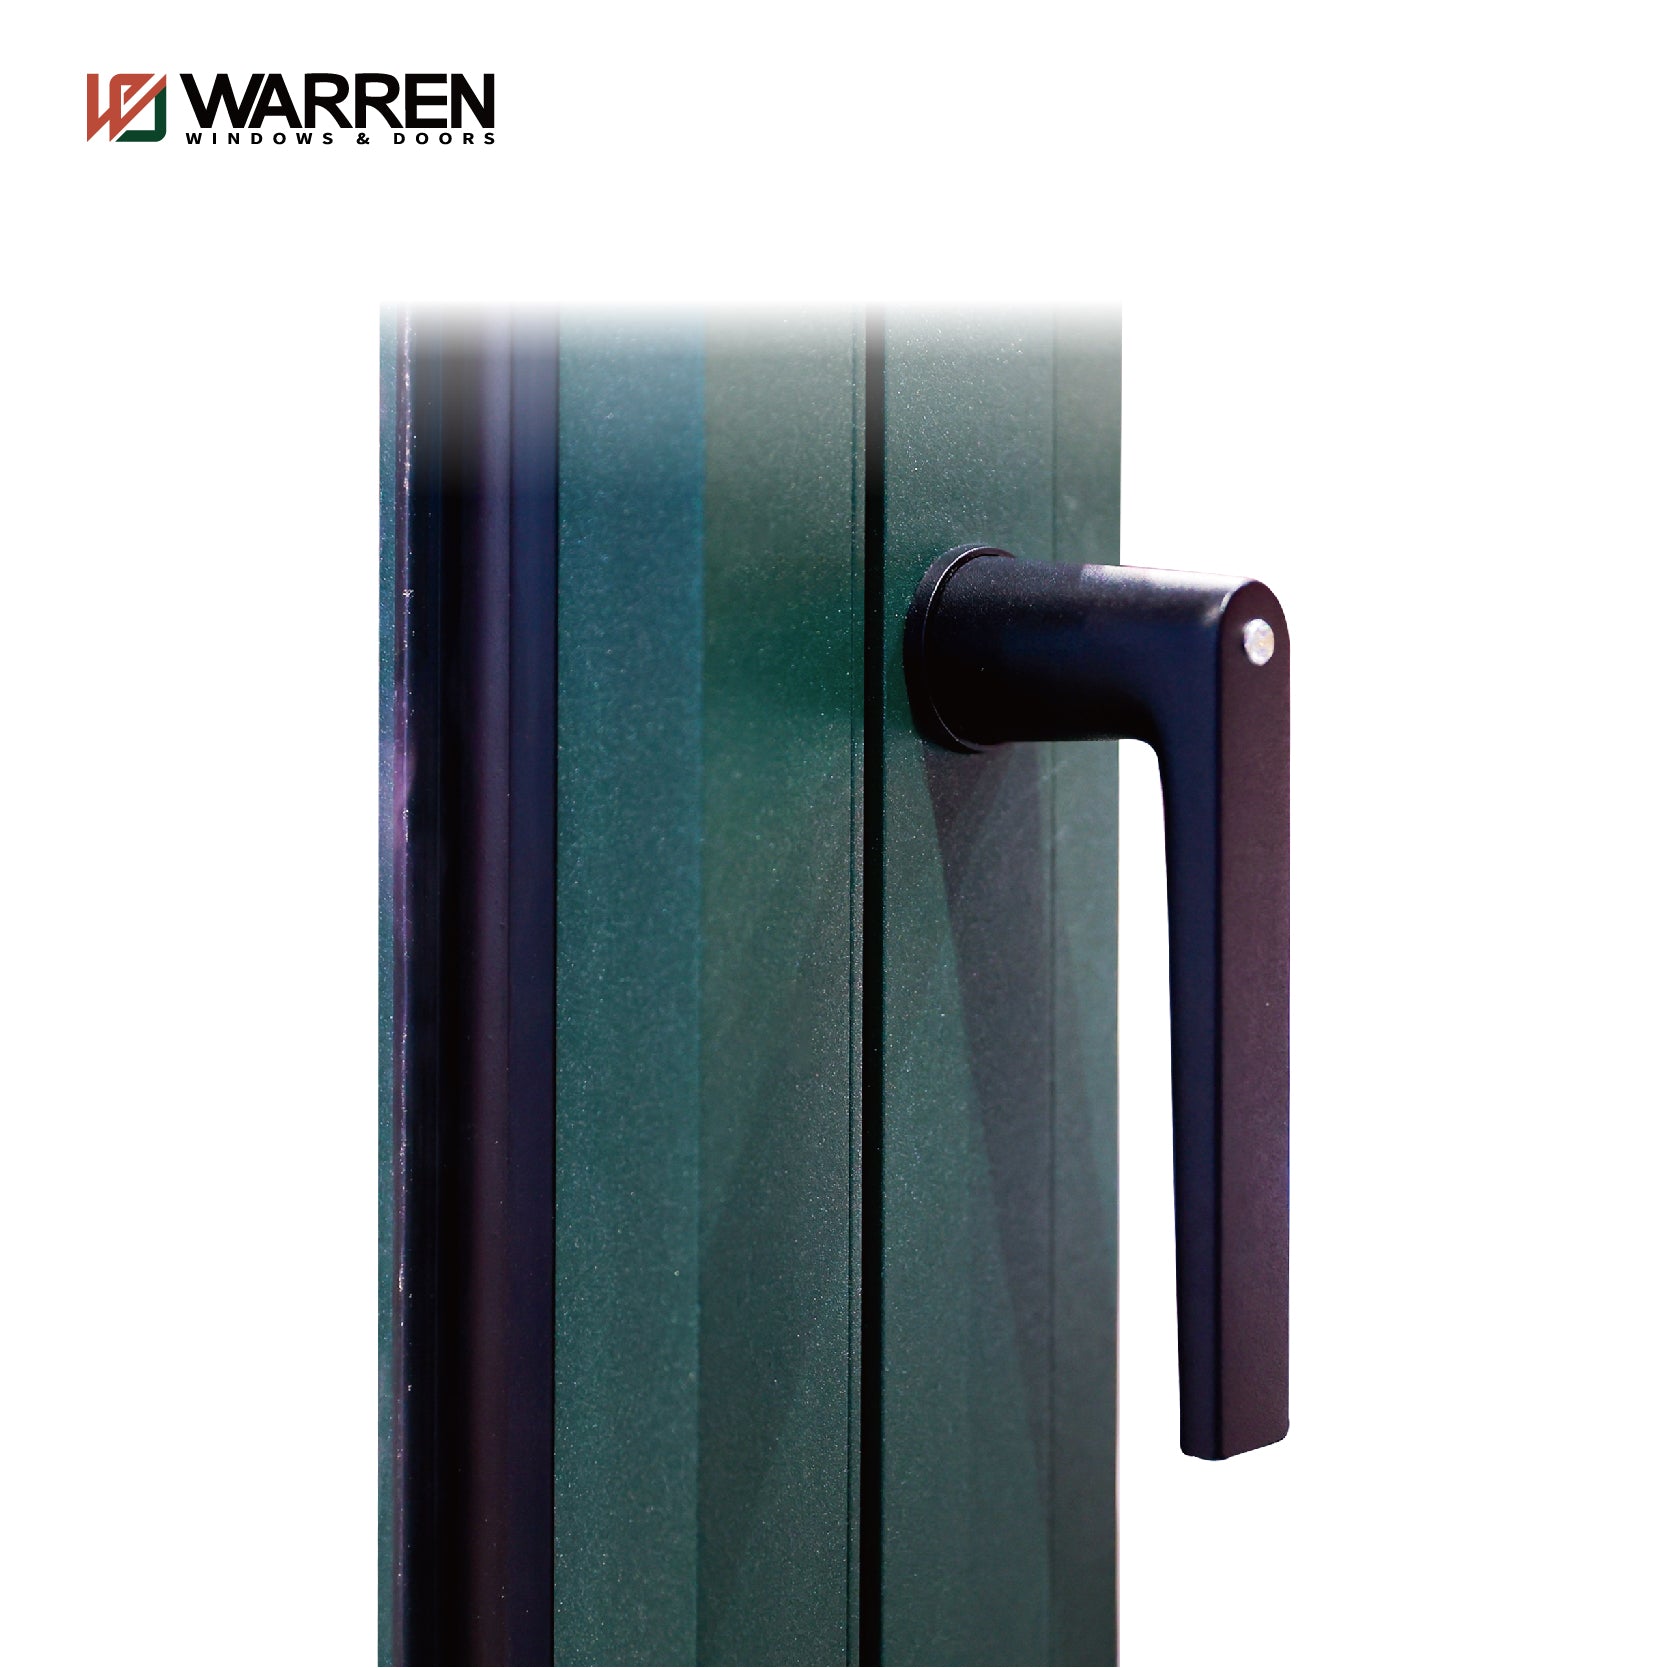 Warren 60x36 window burglar proof tilt and turn double glazing German hardware Aluminium casement window